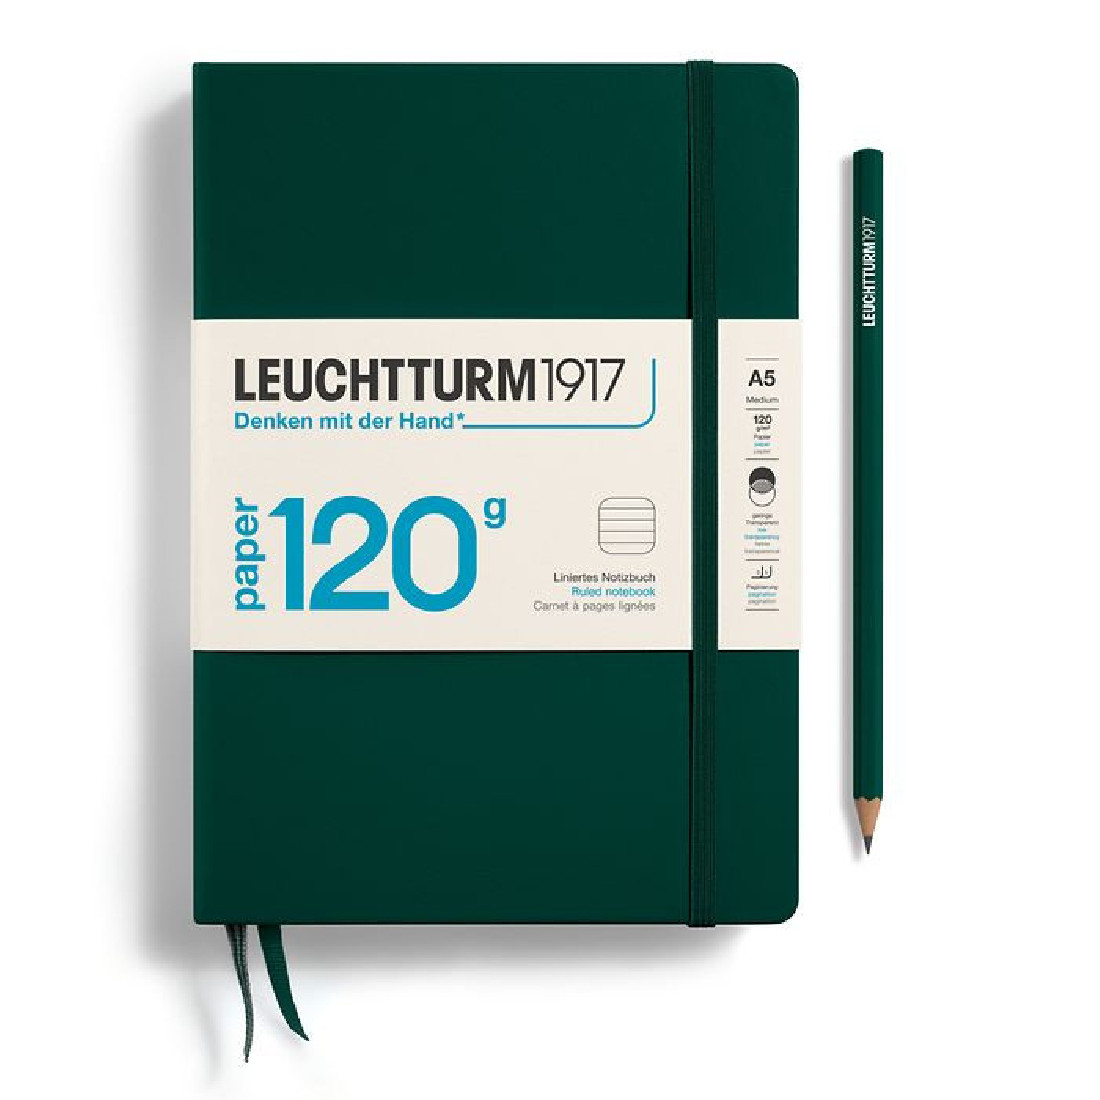 Leuchtturm 1917 Notebook A5 Edition 120g Forest Green Ruled Hard Cover